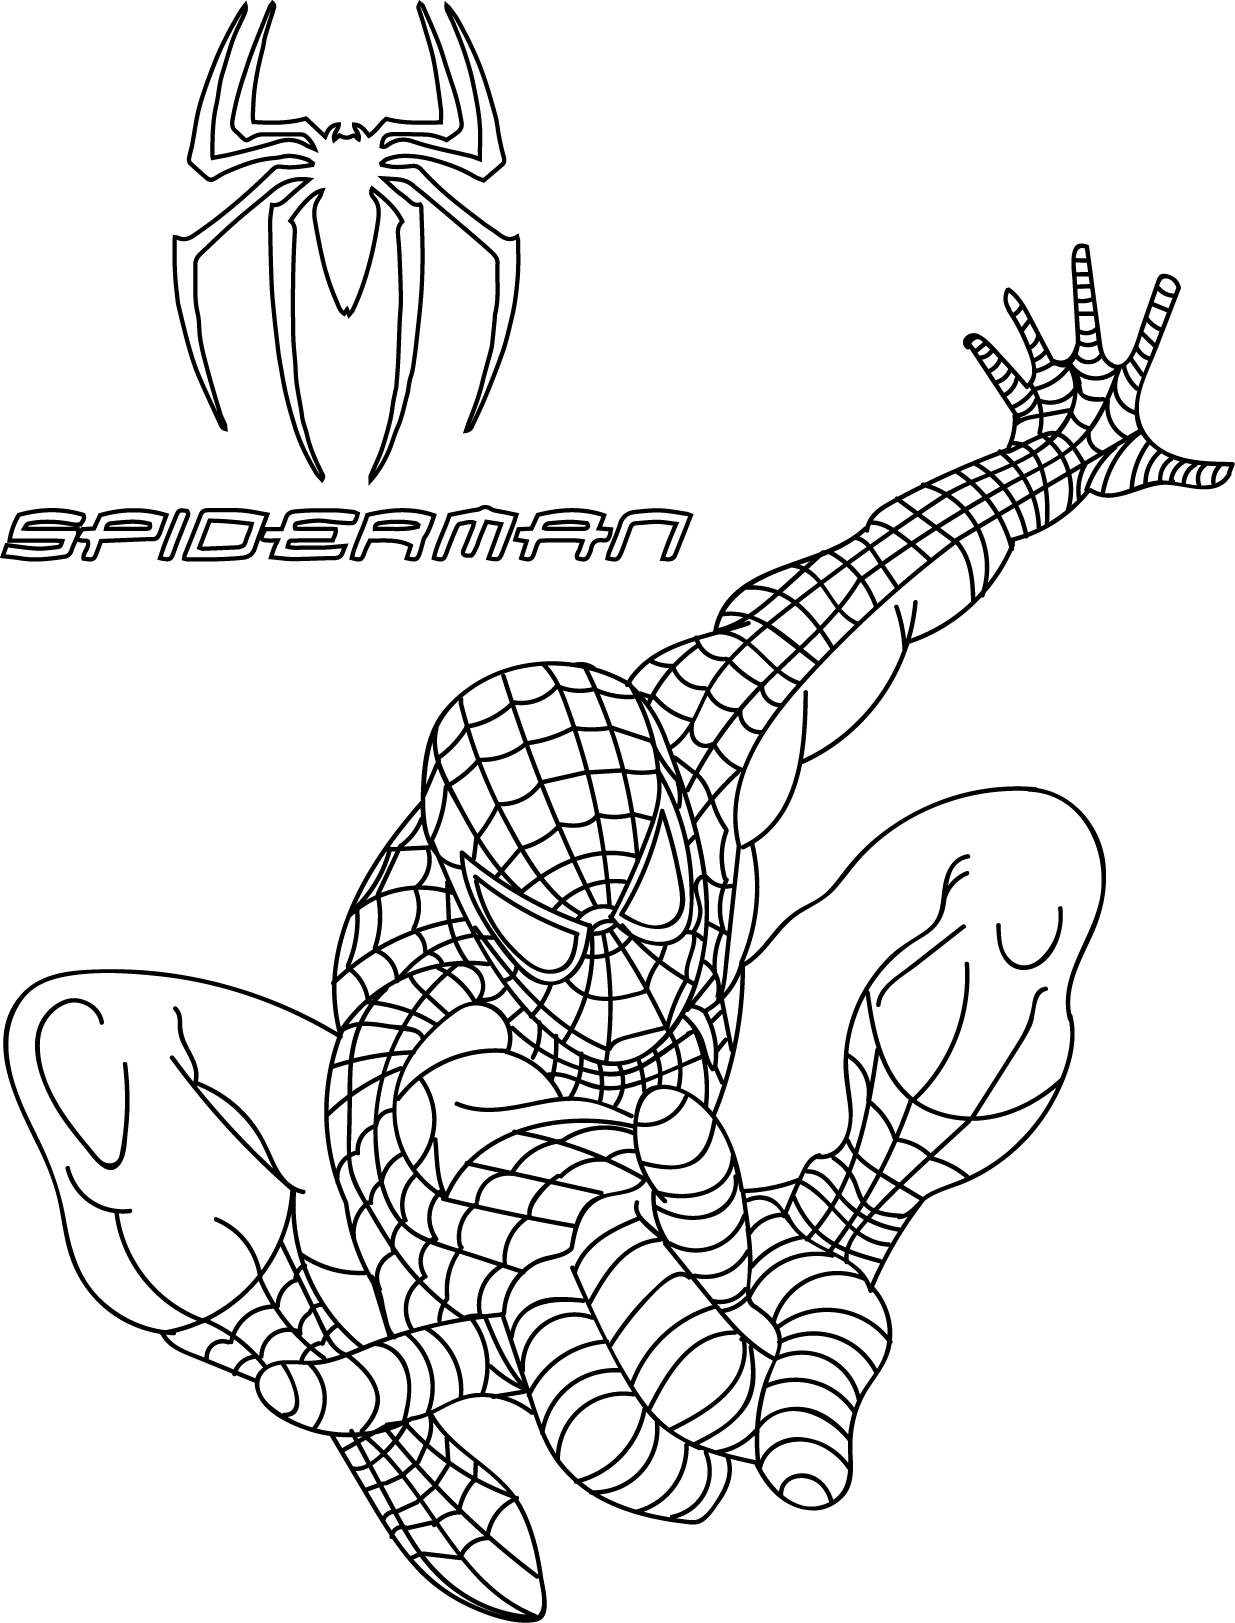 Spiderman Car Coloring Pages At GetColorings Free Printable